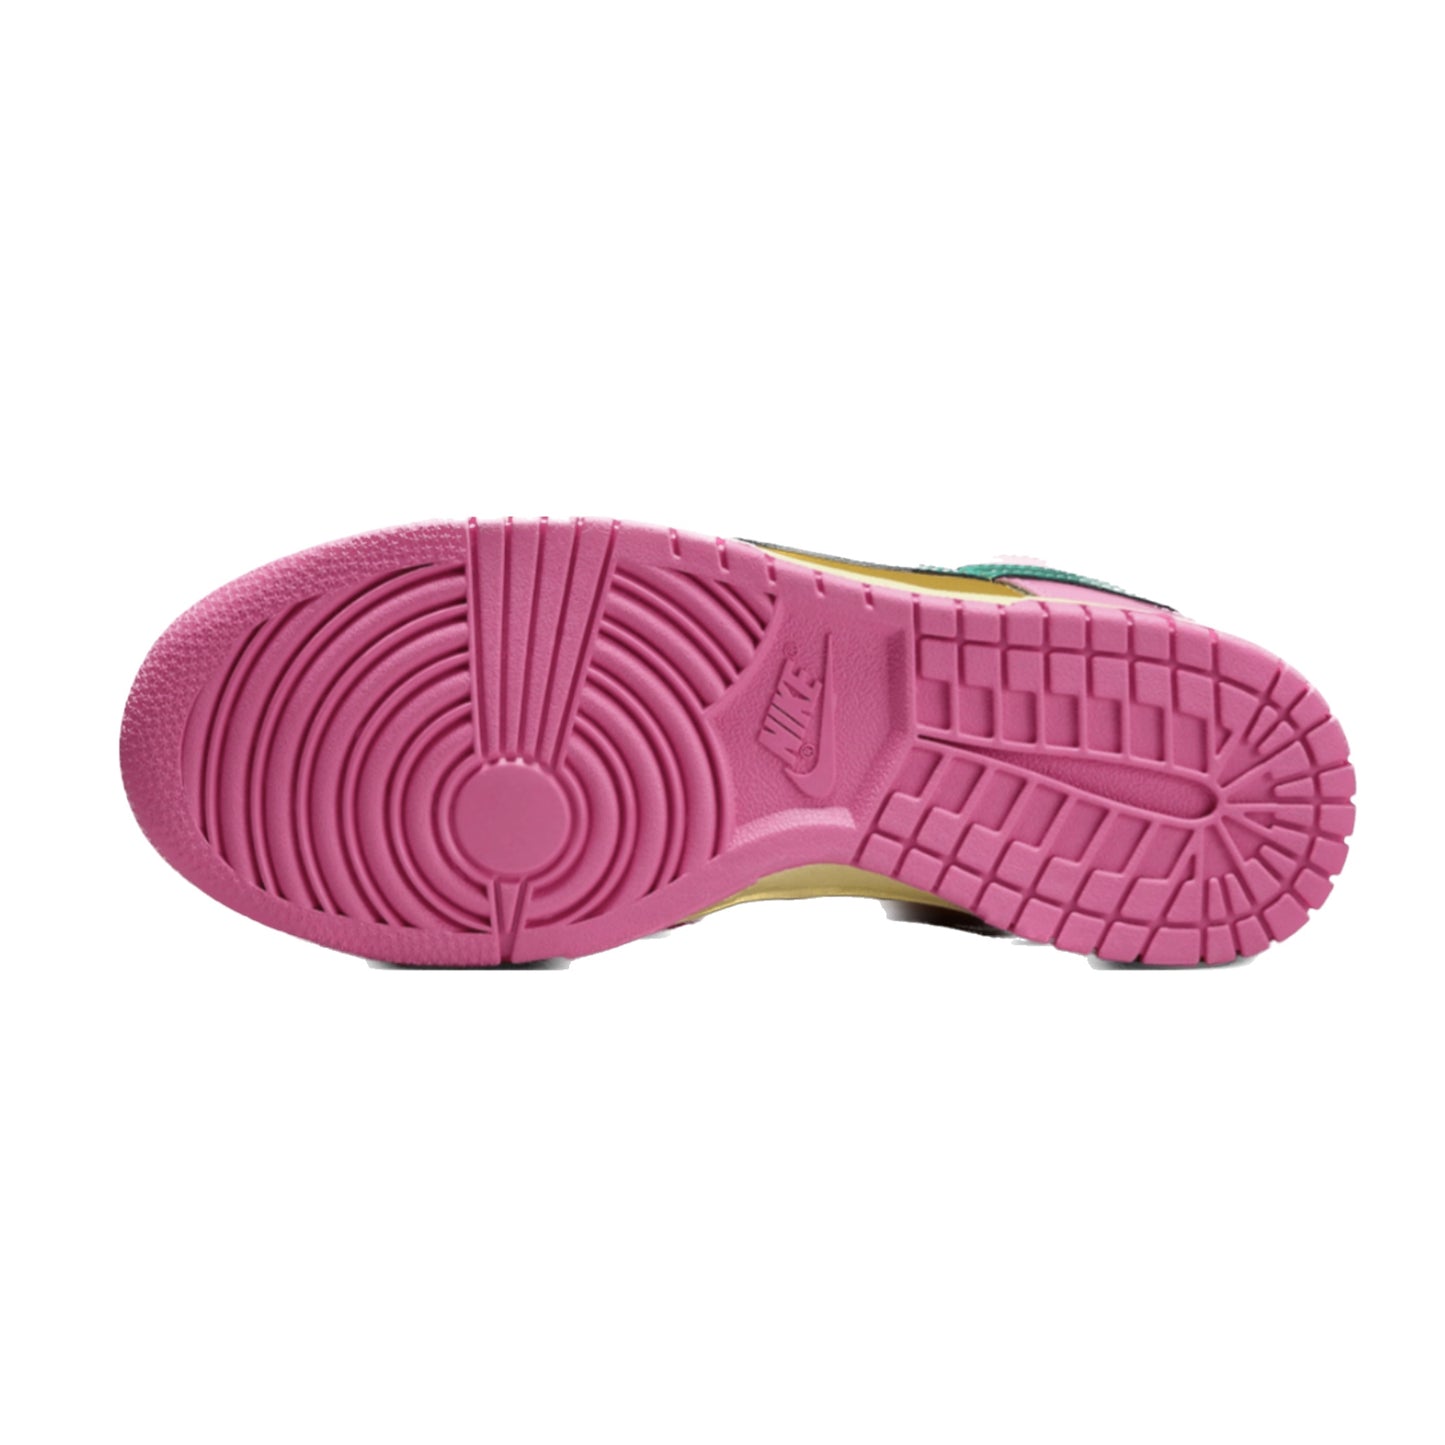 Women's Nike Dunk Low QA Parris Goebel Playful Pink Multi Color Bronzine Clear Jade Luminous Green